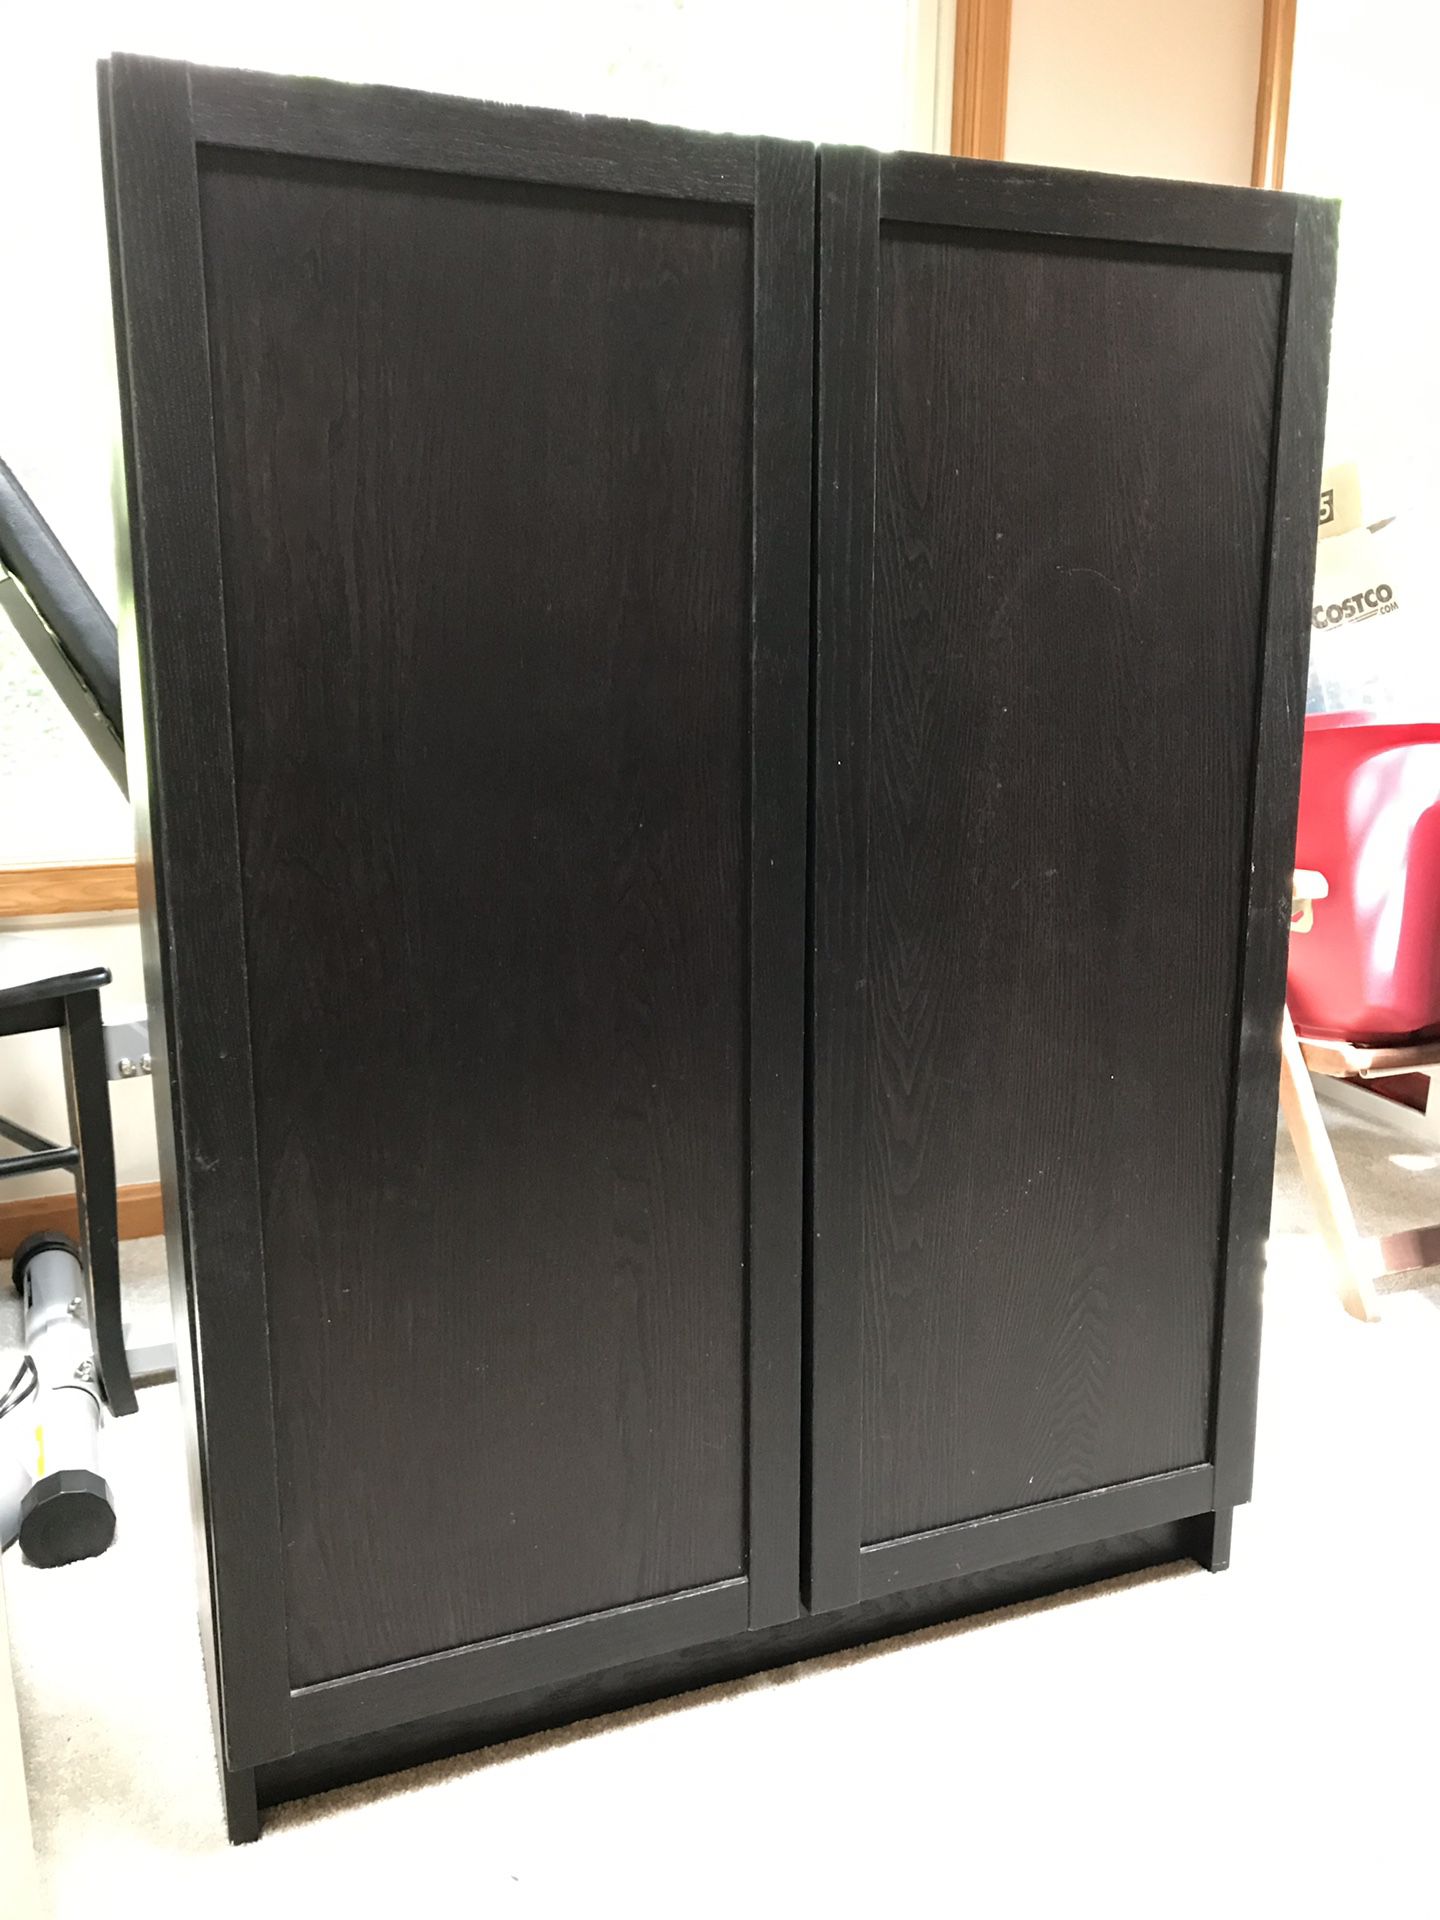 2 door cabinet / organizer with adjustable shelves ( good condition)